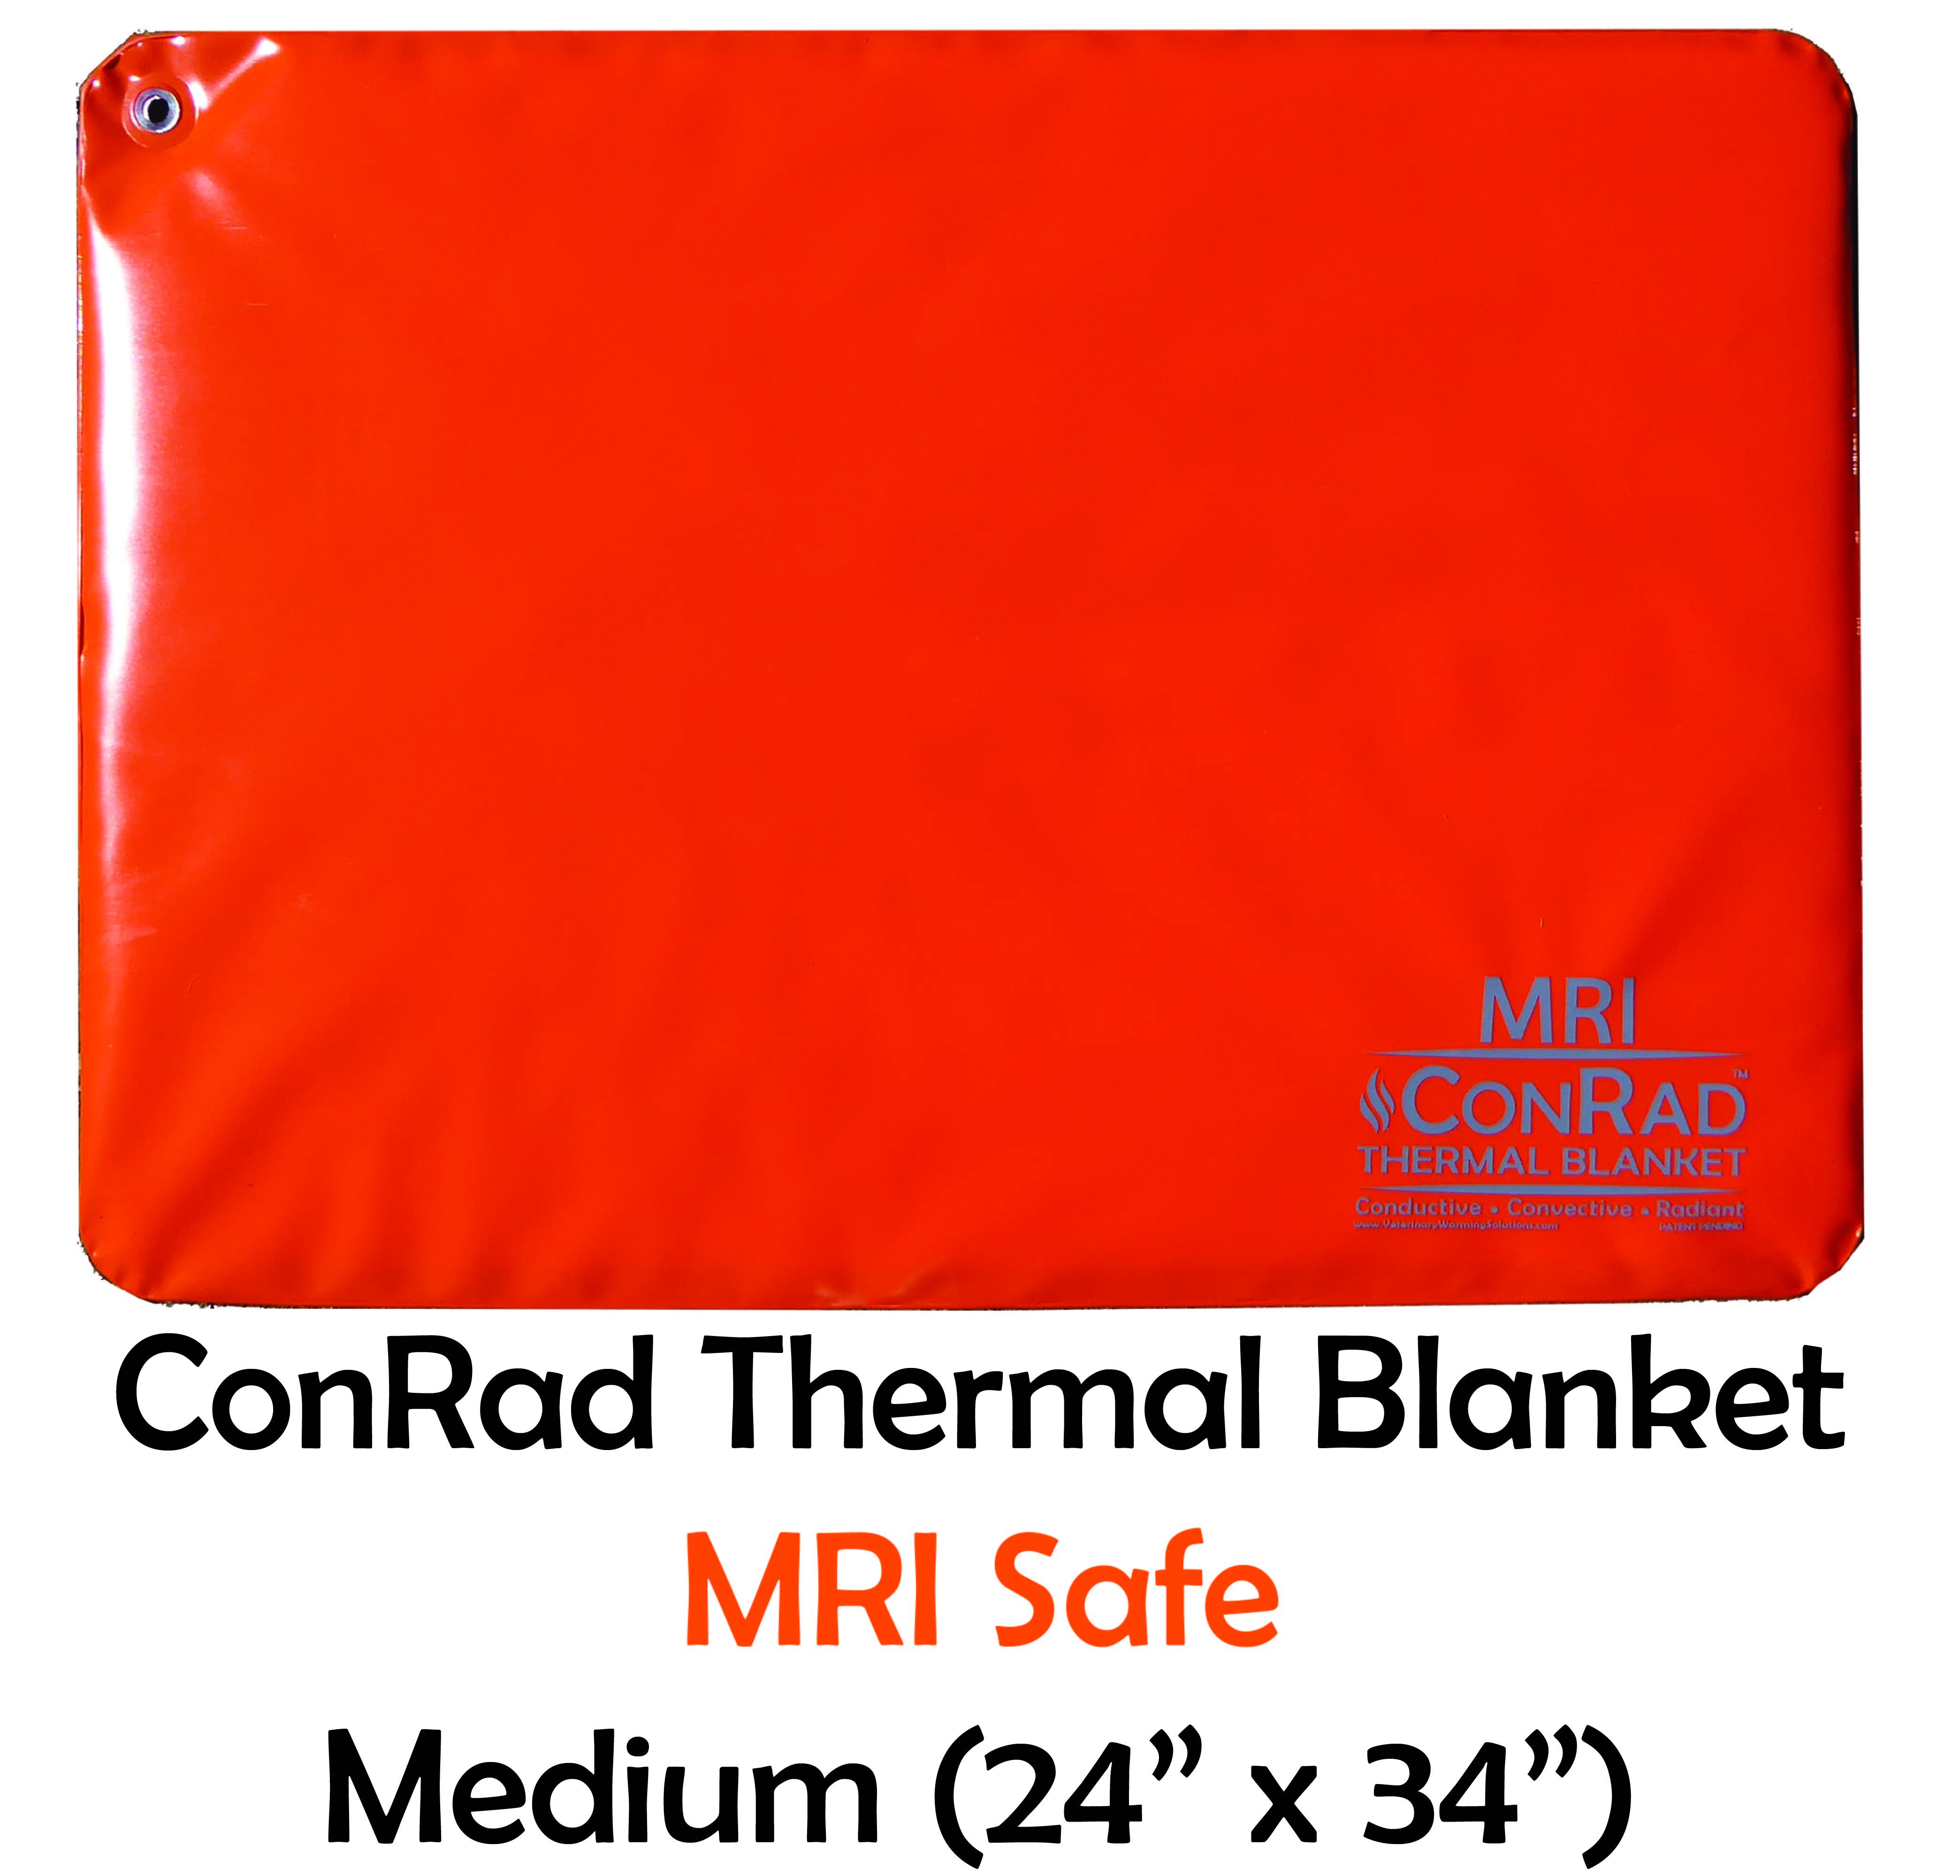 Veterinary Warming Solutions ConRad MRI-Safe Thermal Blanket